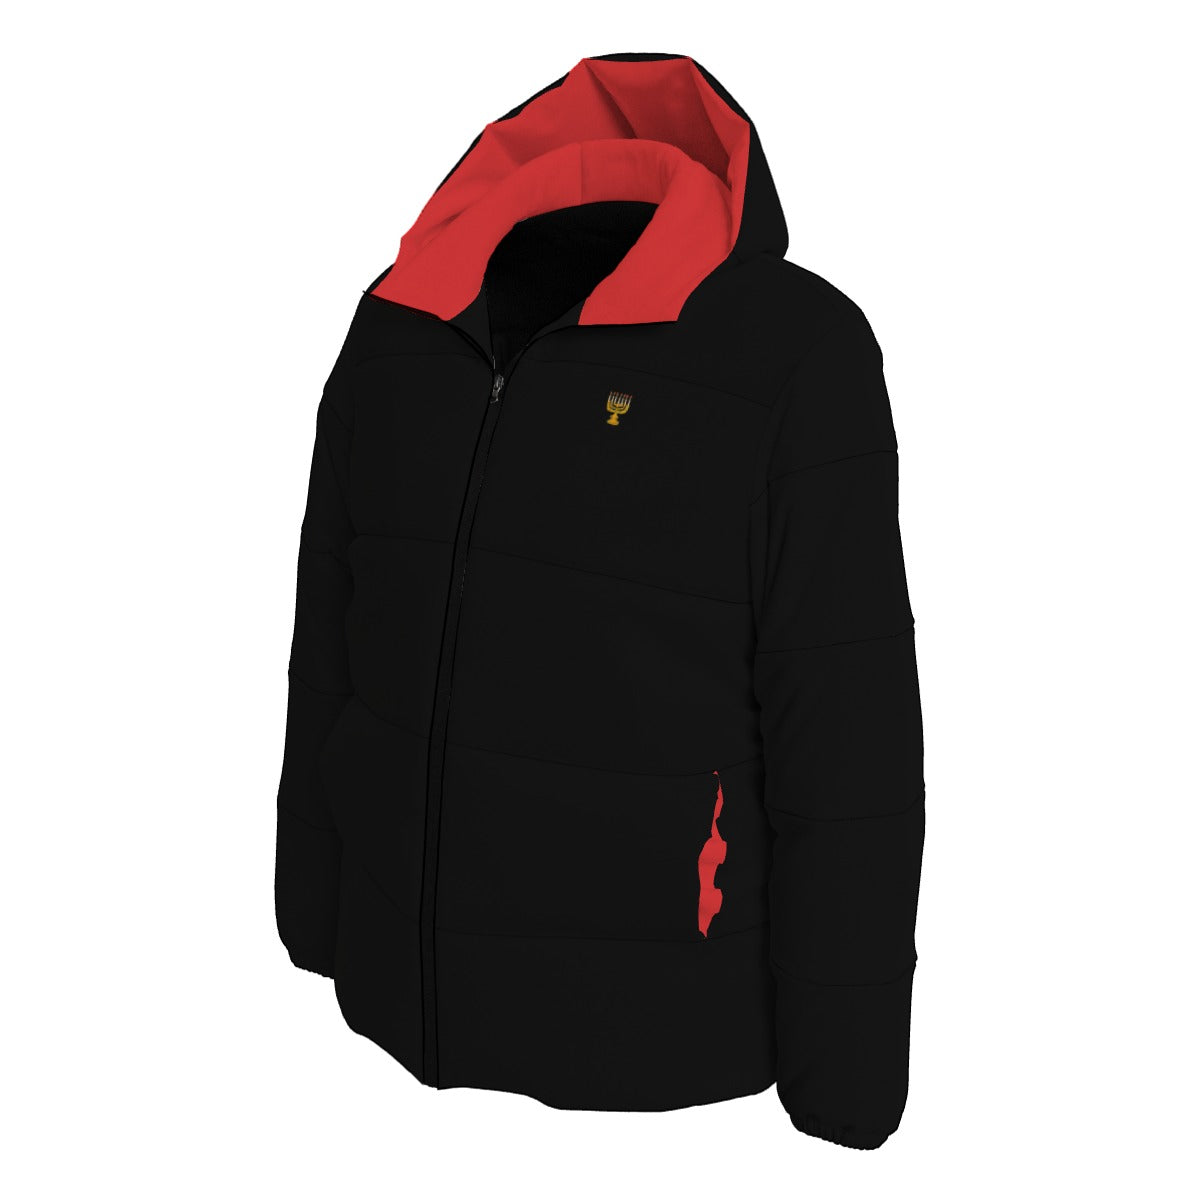 Menorah Black Red All-Over Print Unisex Padded Jacket